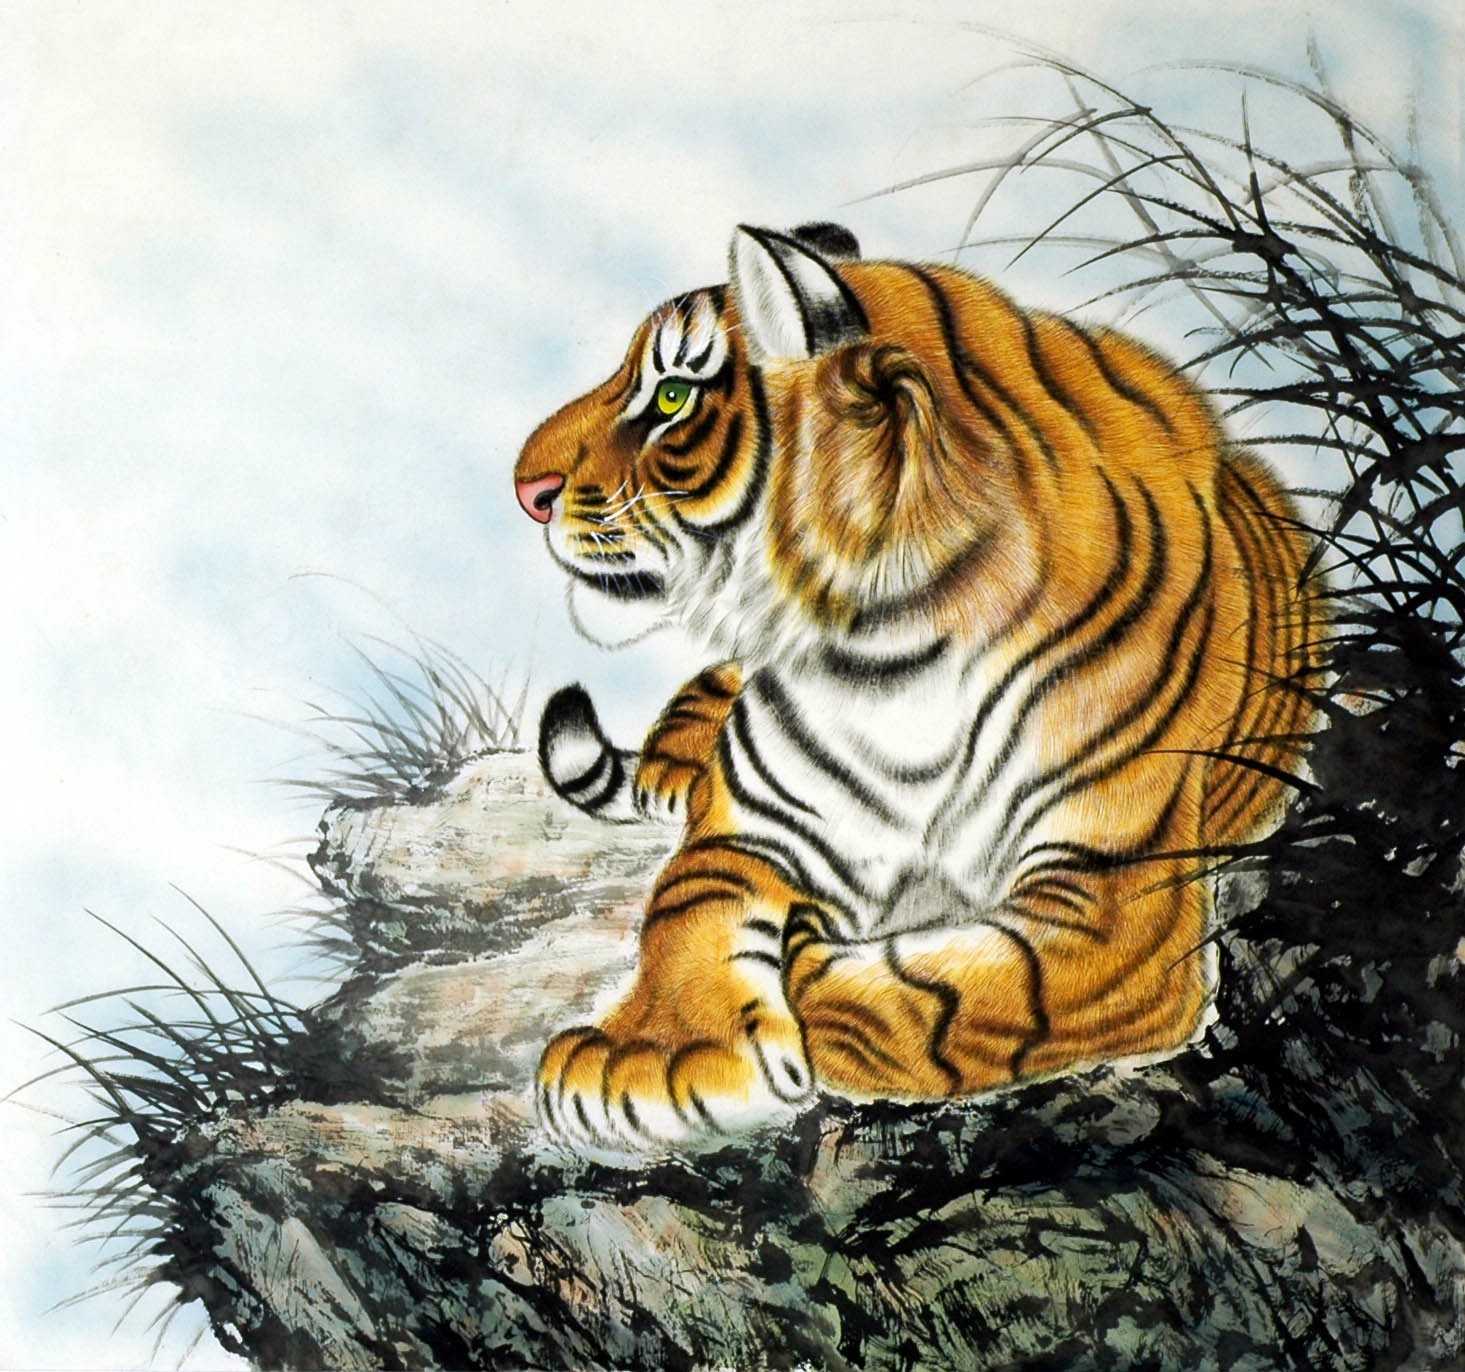 Chinese Tiger Painting - CNAG010010